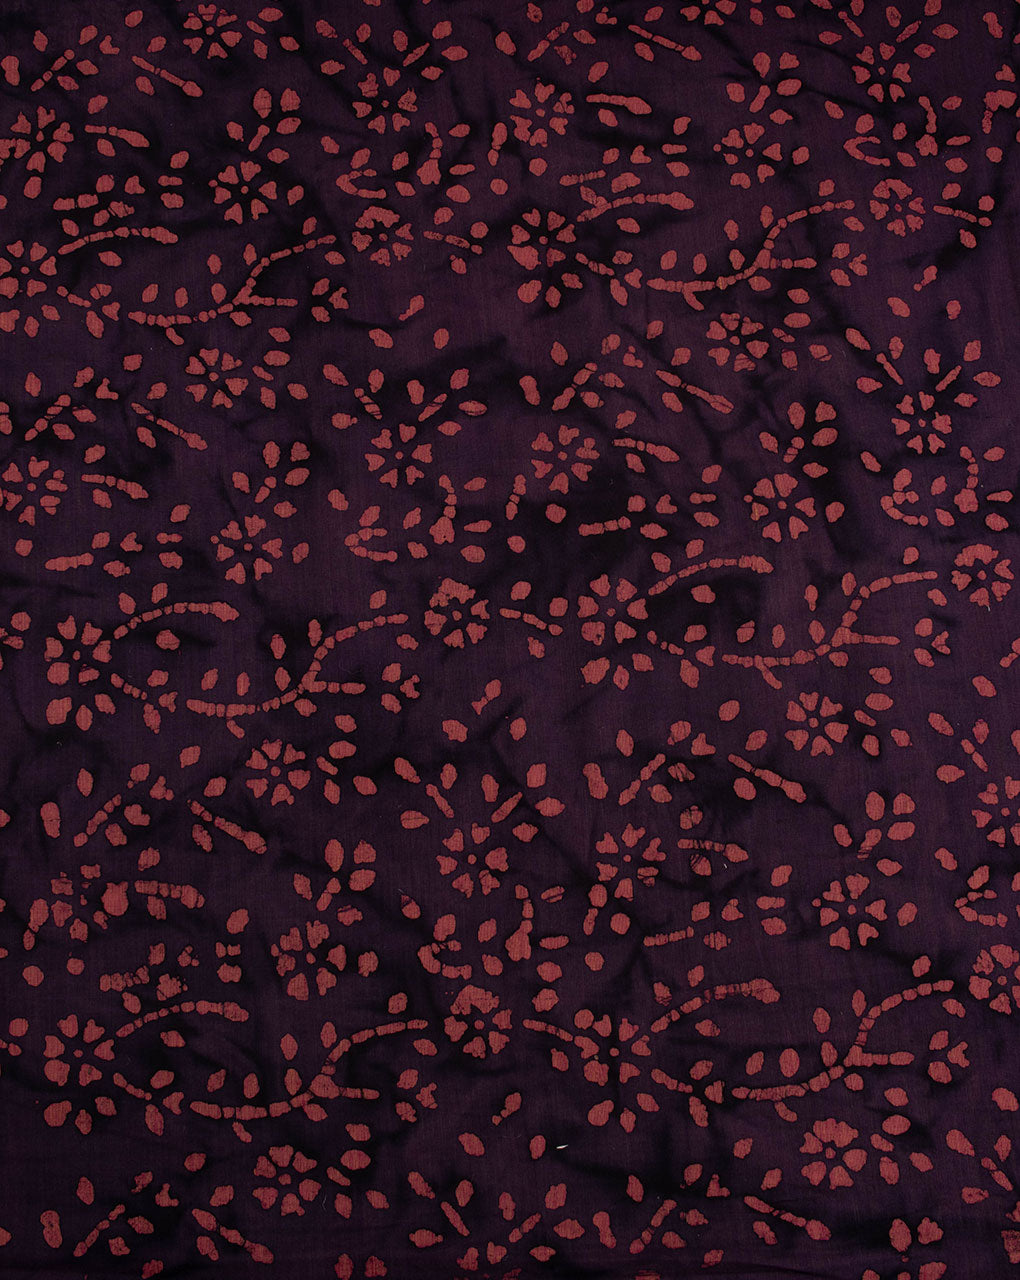 Floral Hand Block Wax Batik Cotton Fabric - Fabriclore.com